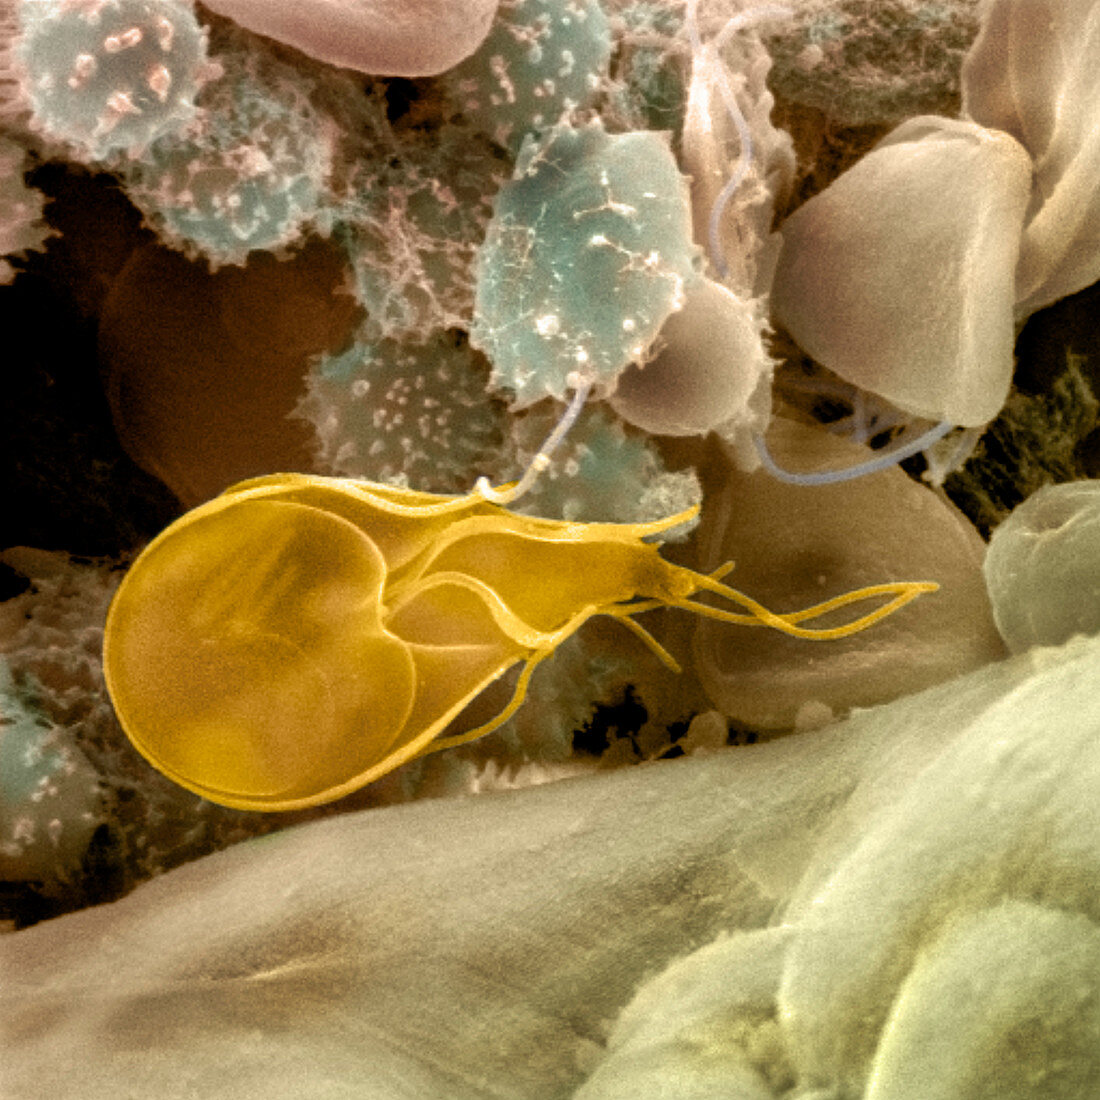 Giardia lamblia protozoan,SEM